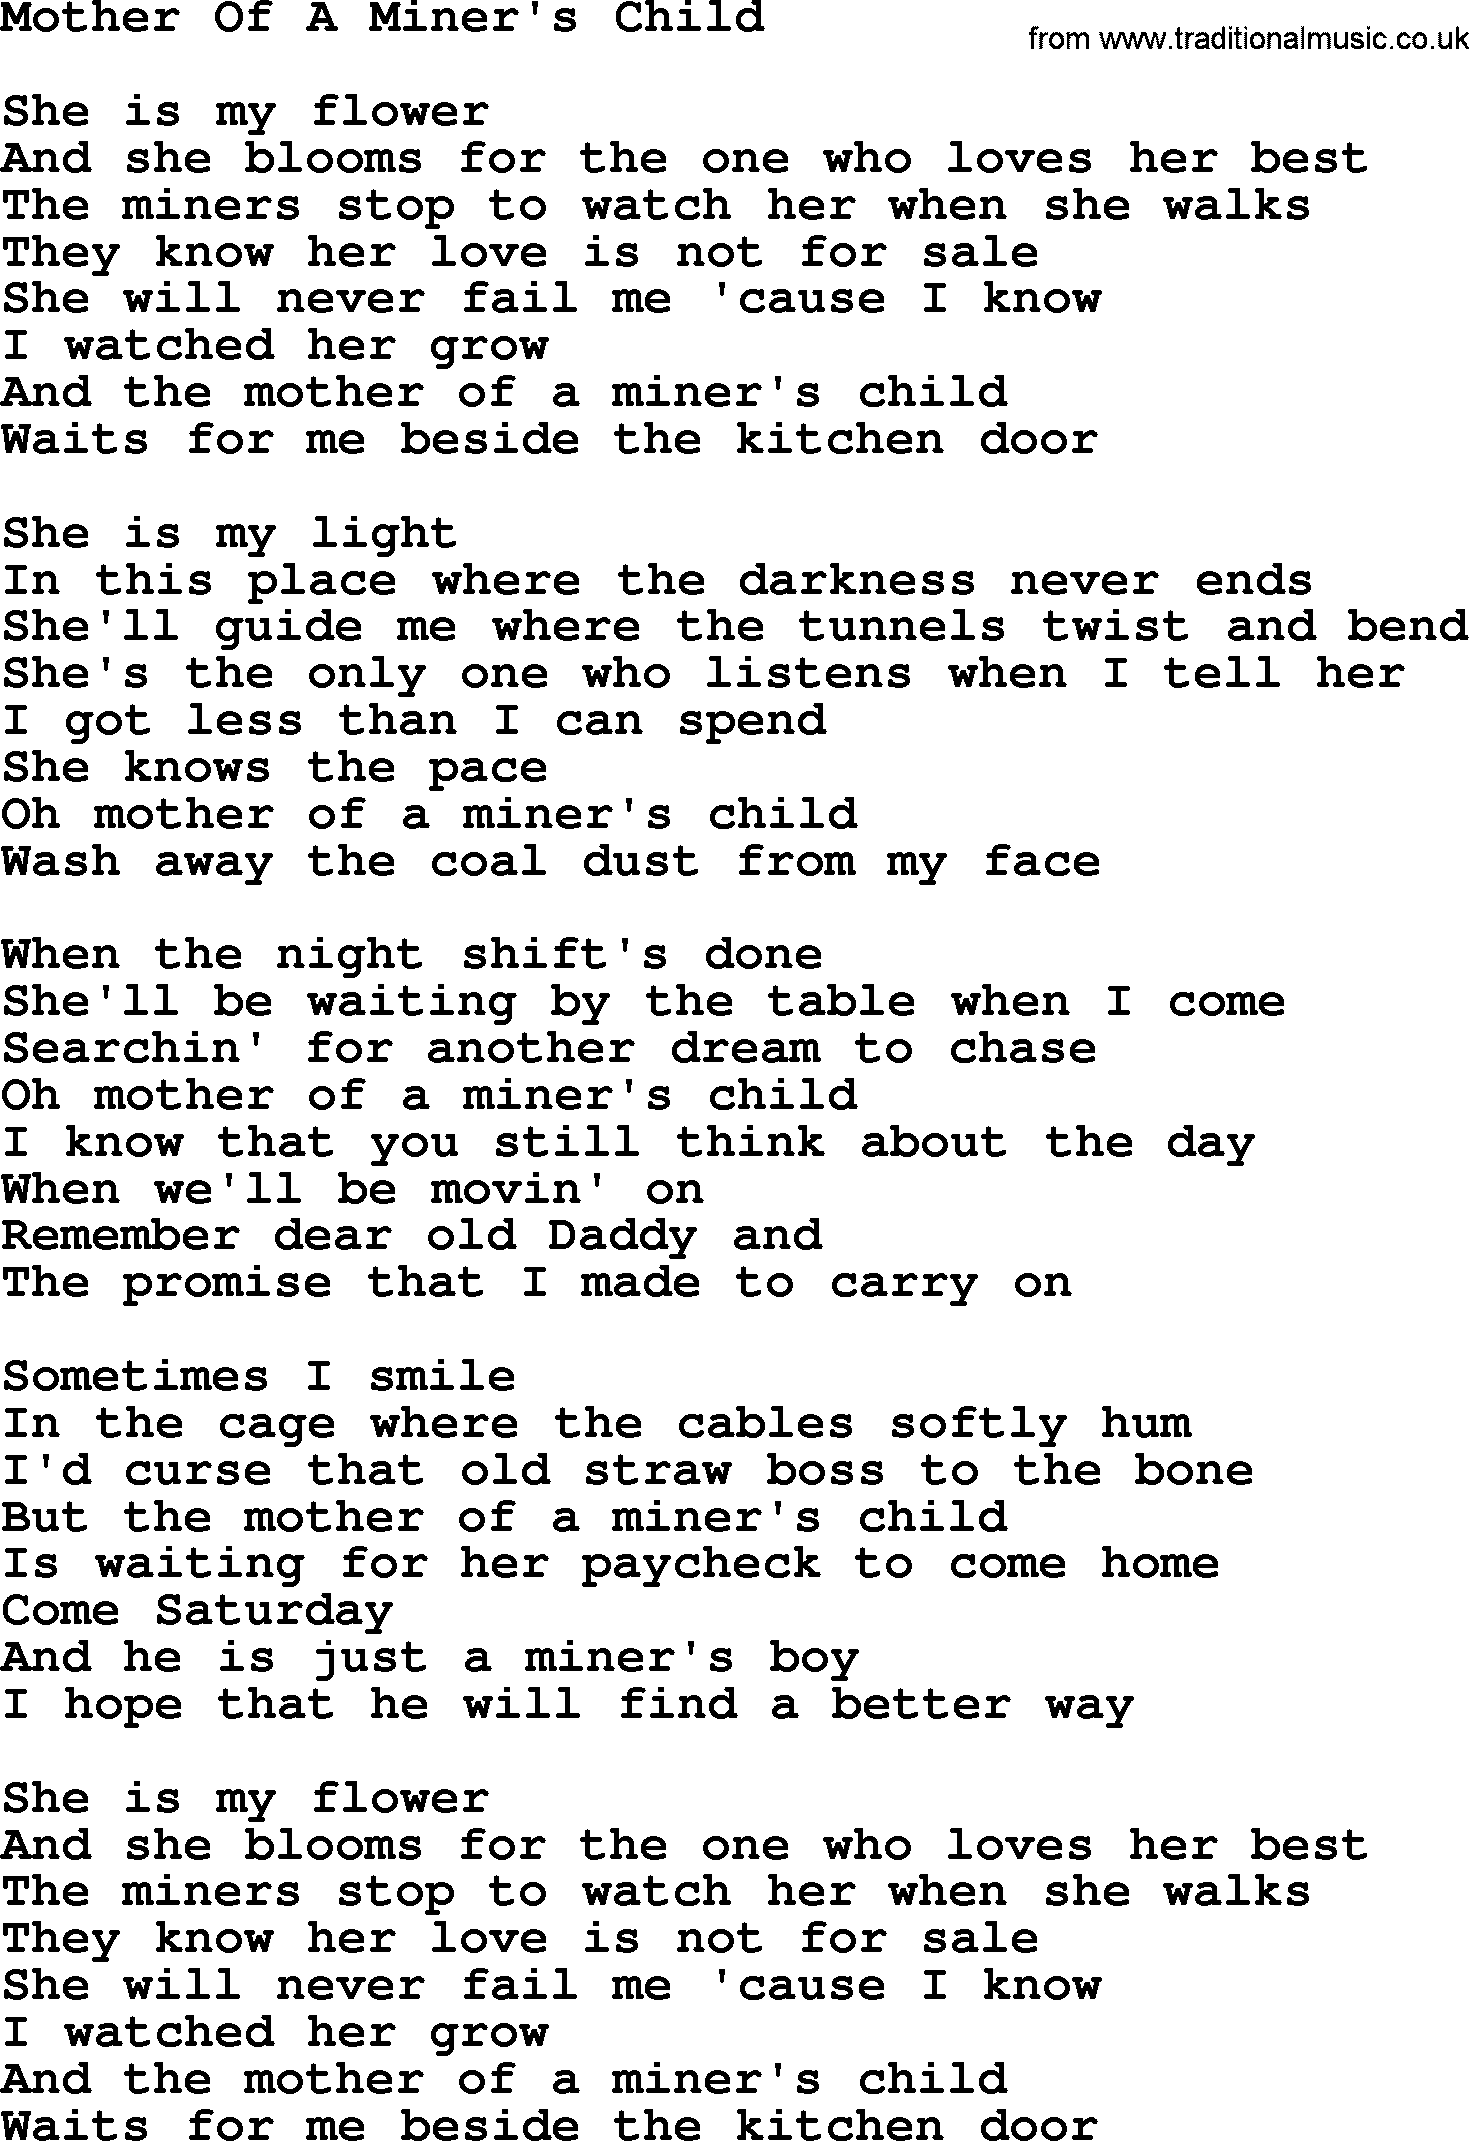 Gordon Lightfoot song Mother Of A Miner's Child, lyrics